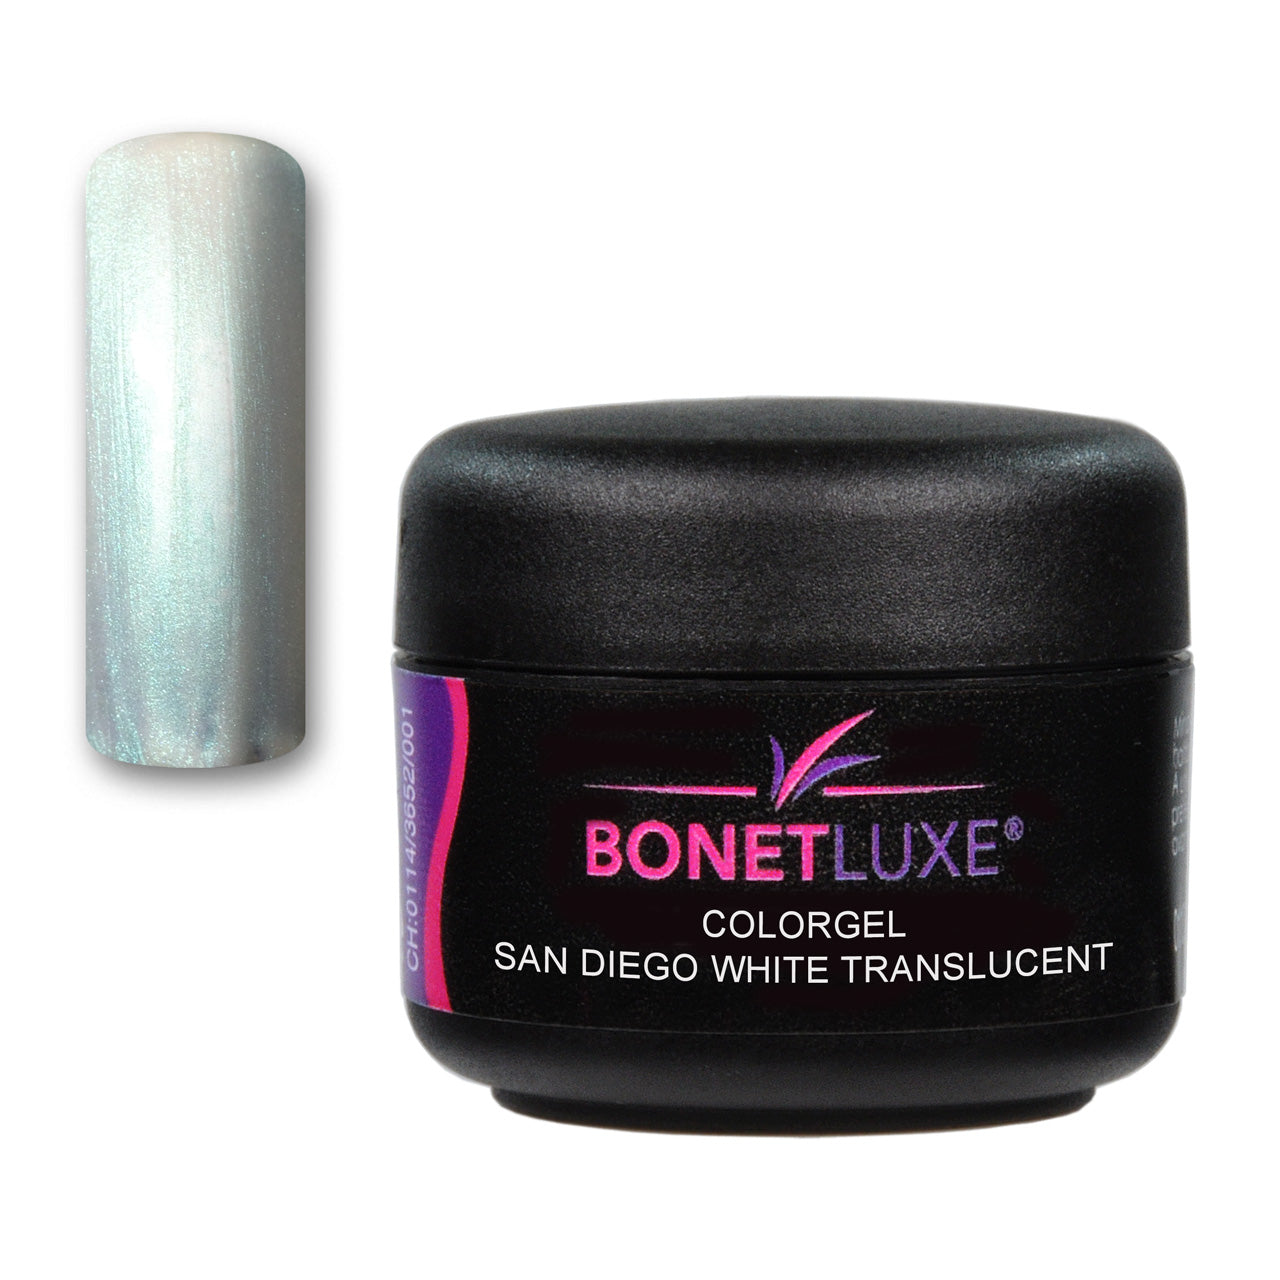 Bonetluxe Colorgel San Diego White Translucent